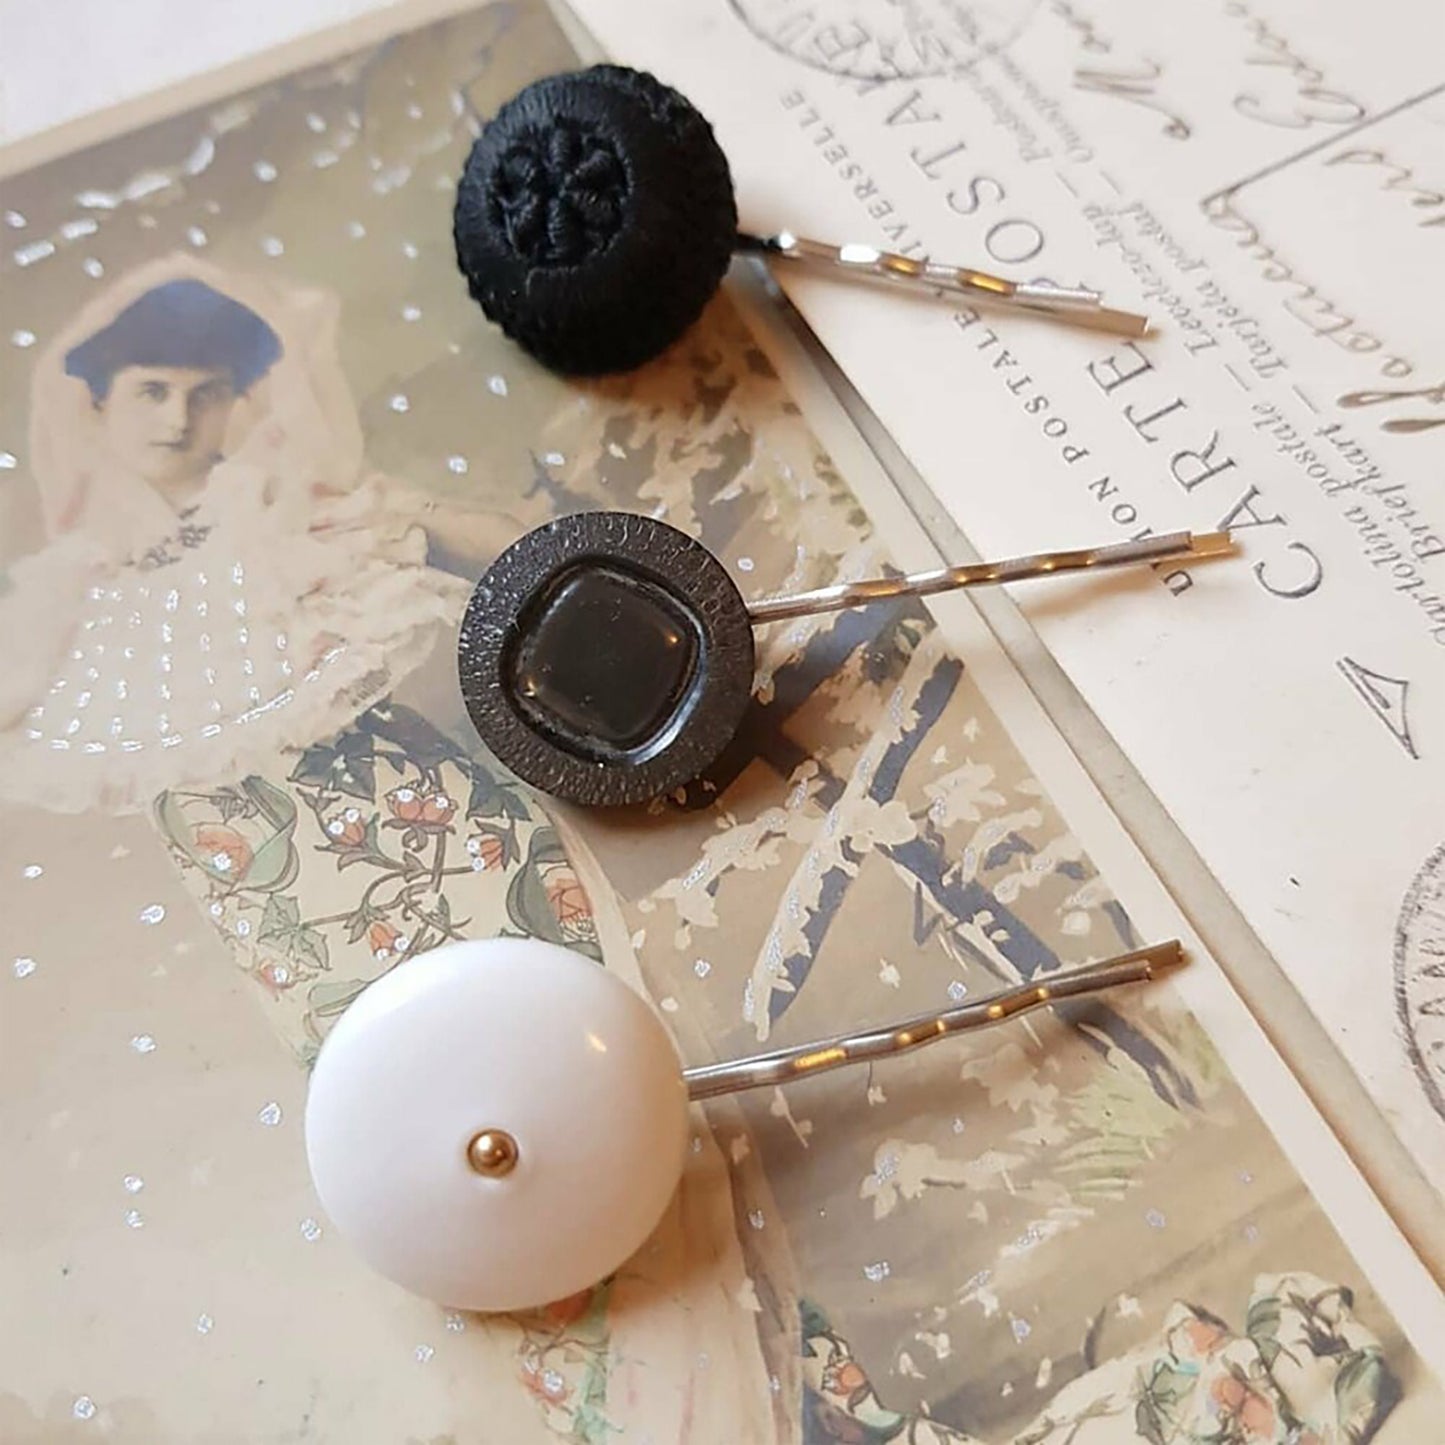 Set of 3 Vintage Button Hair Pins - Zero waste gift